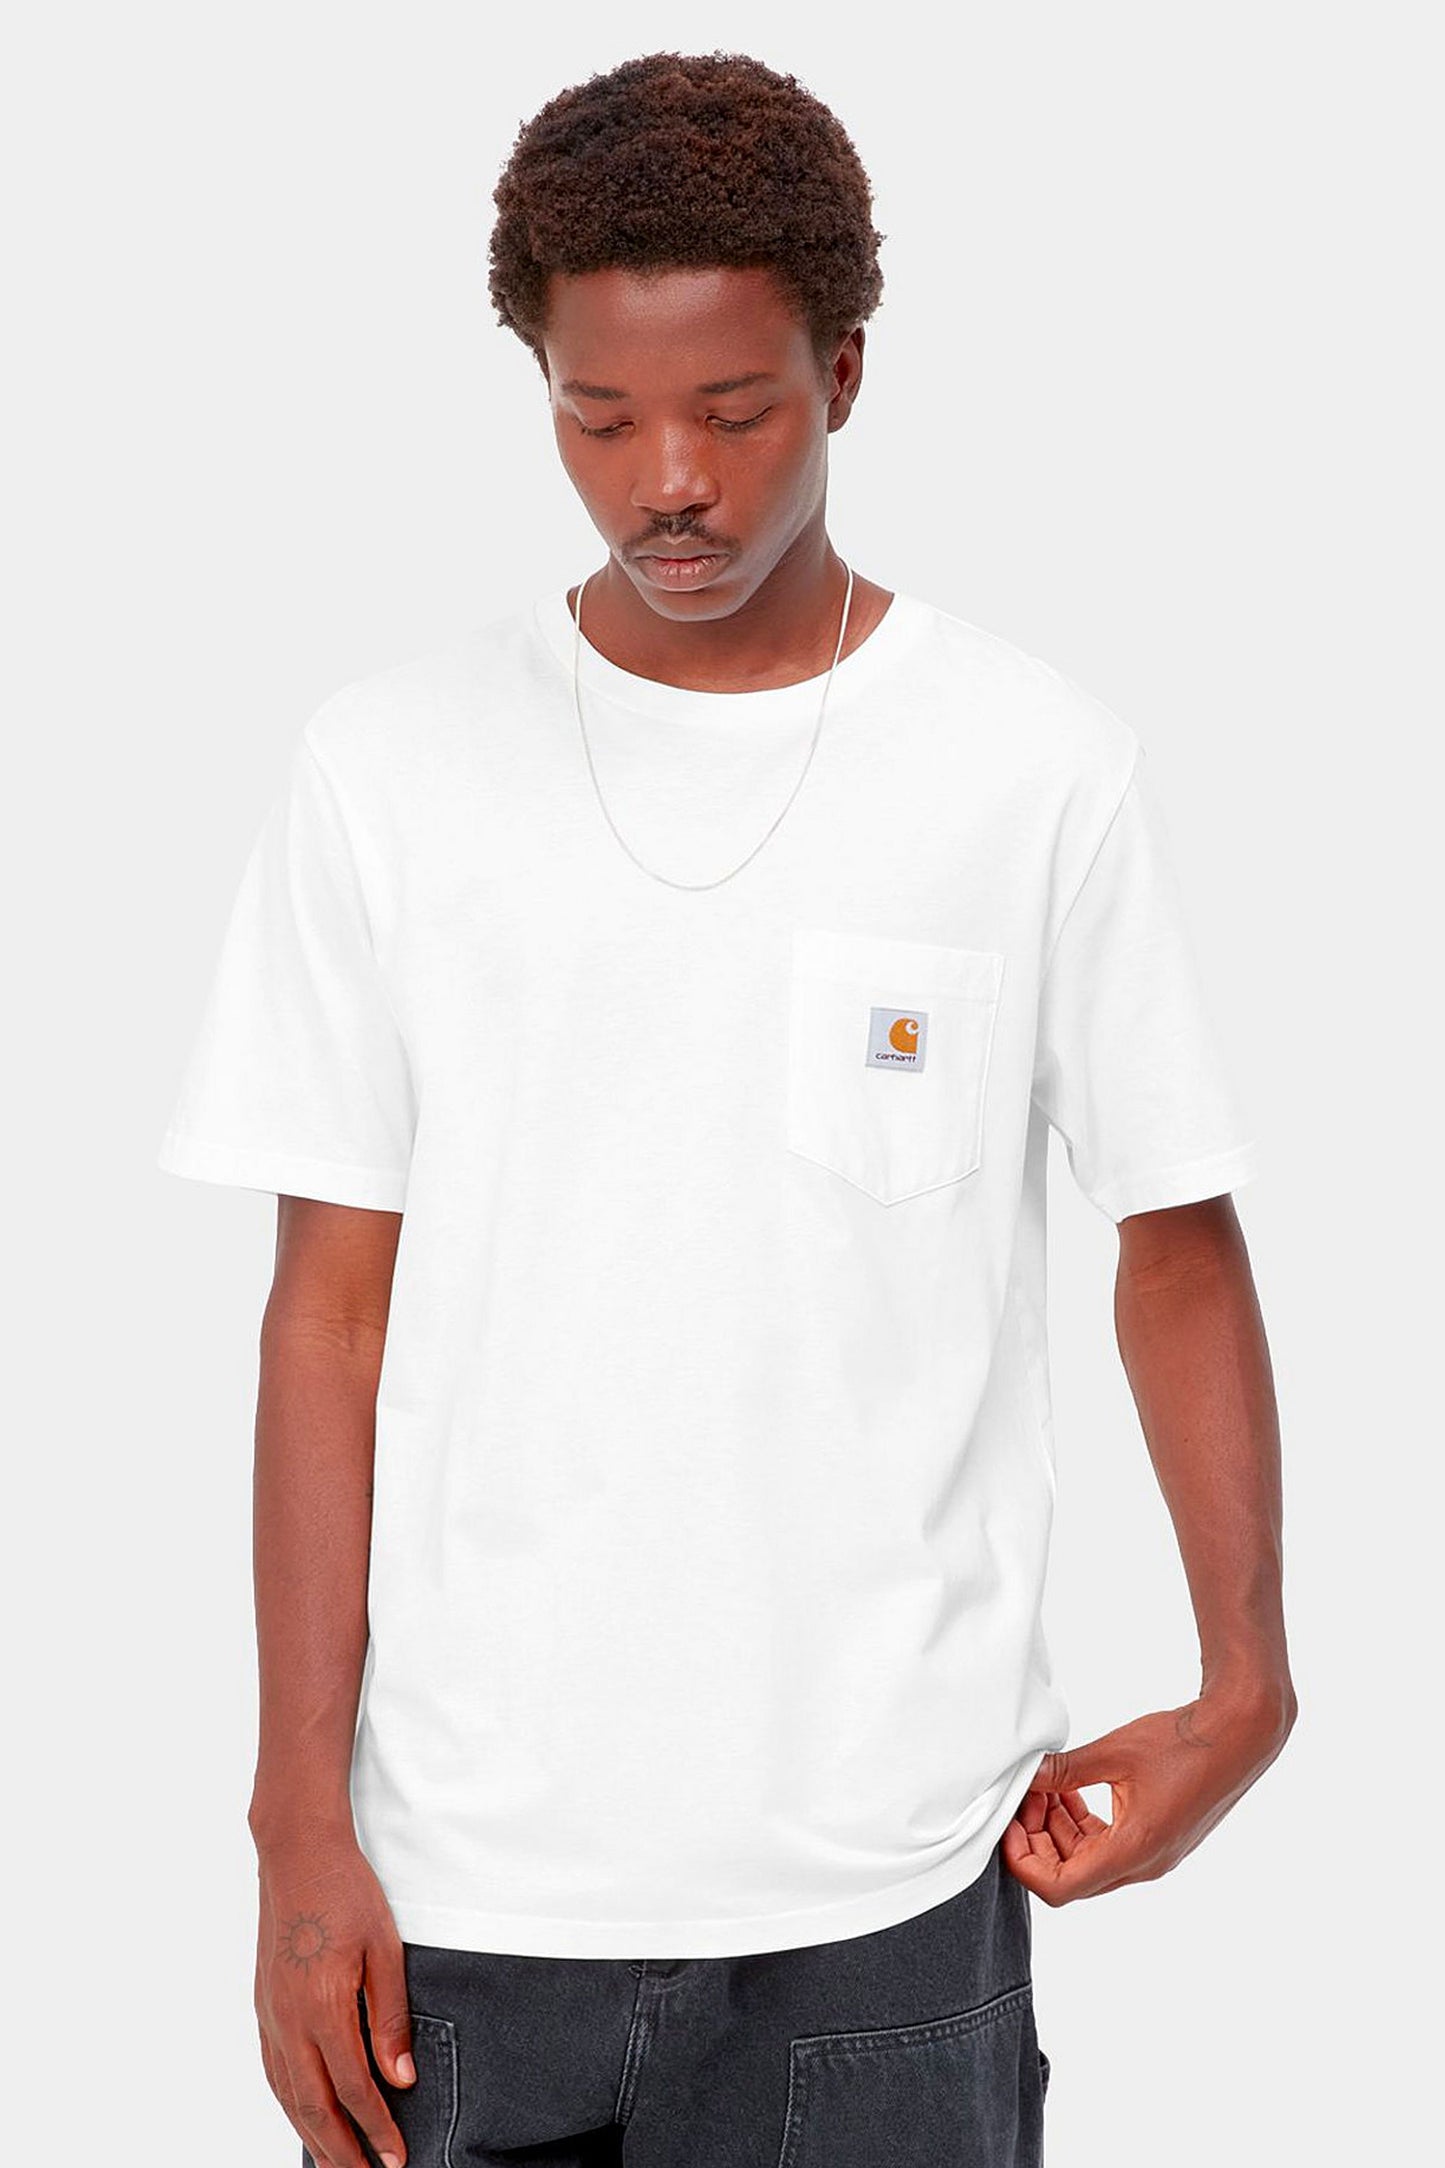 Pukas-Surf-Shop-carhartt-tee-man-pocket-shirt-white